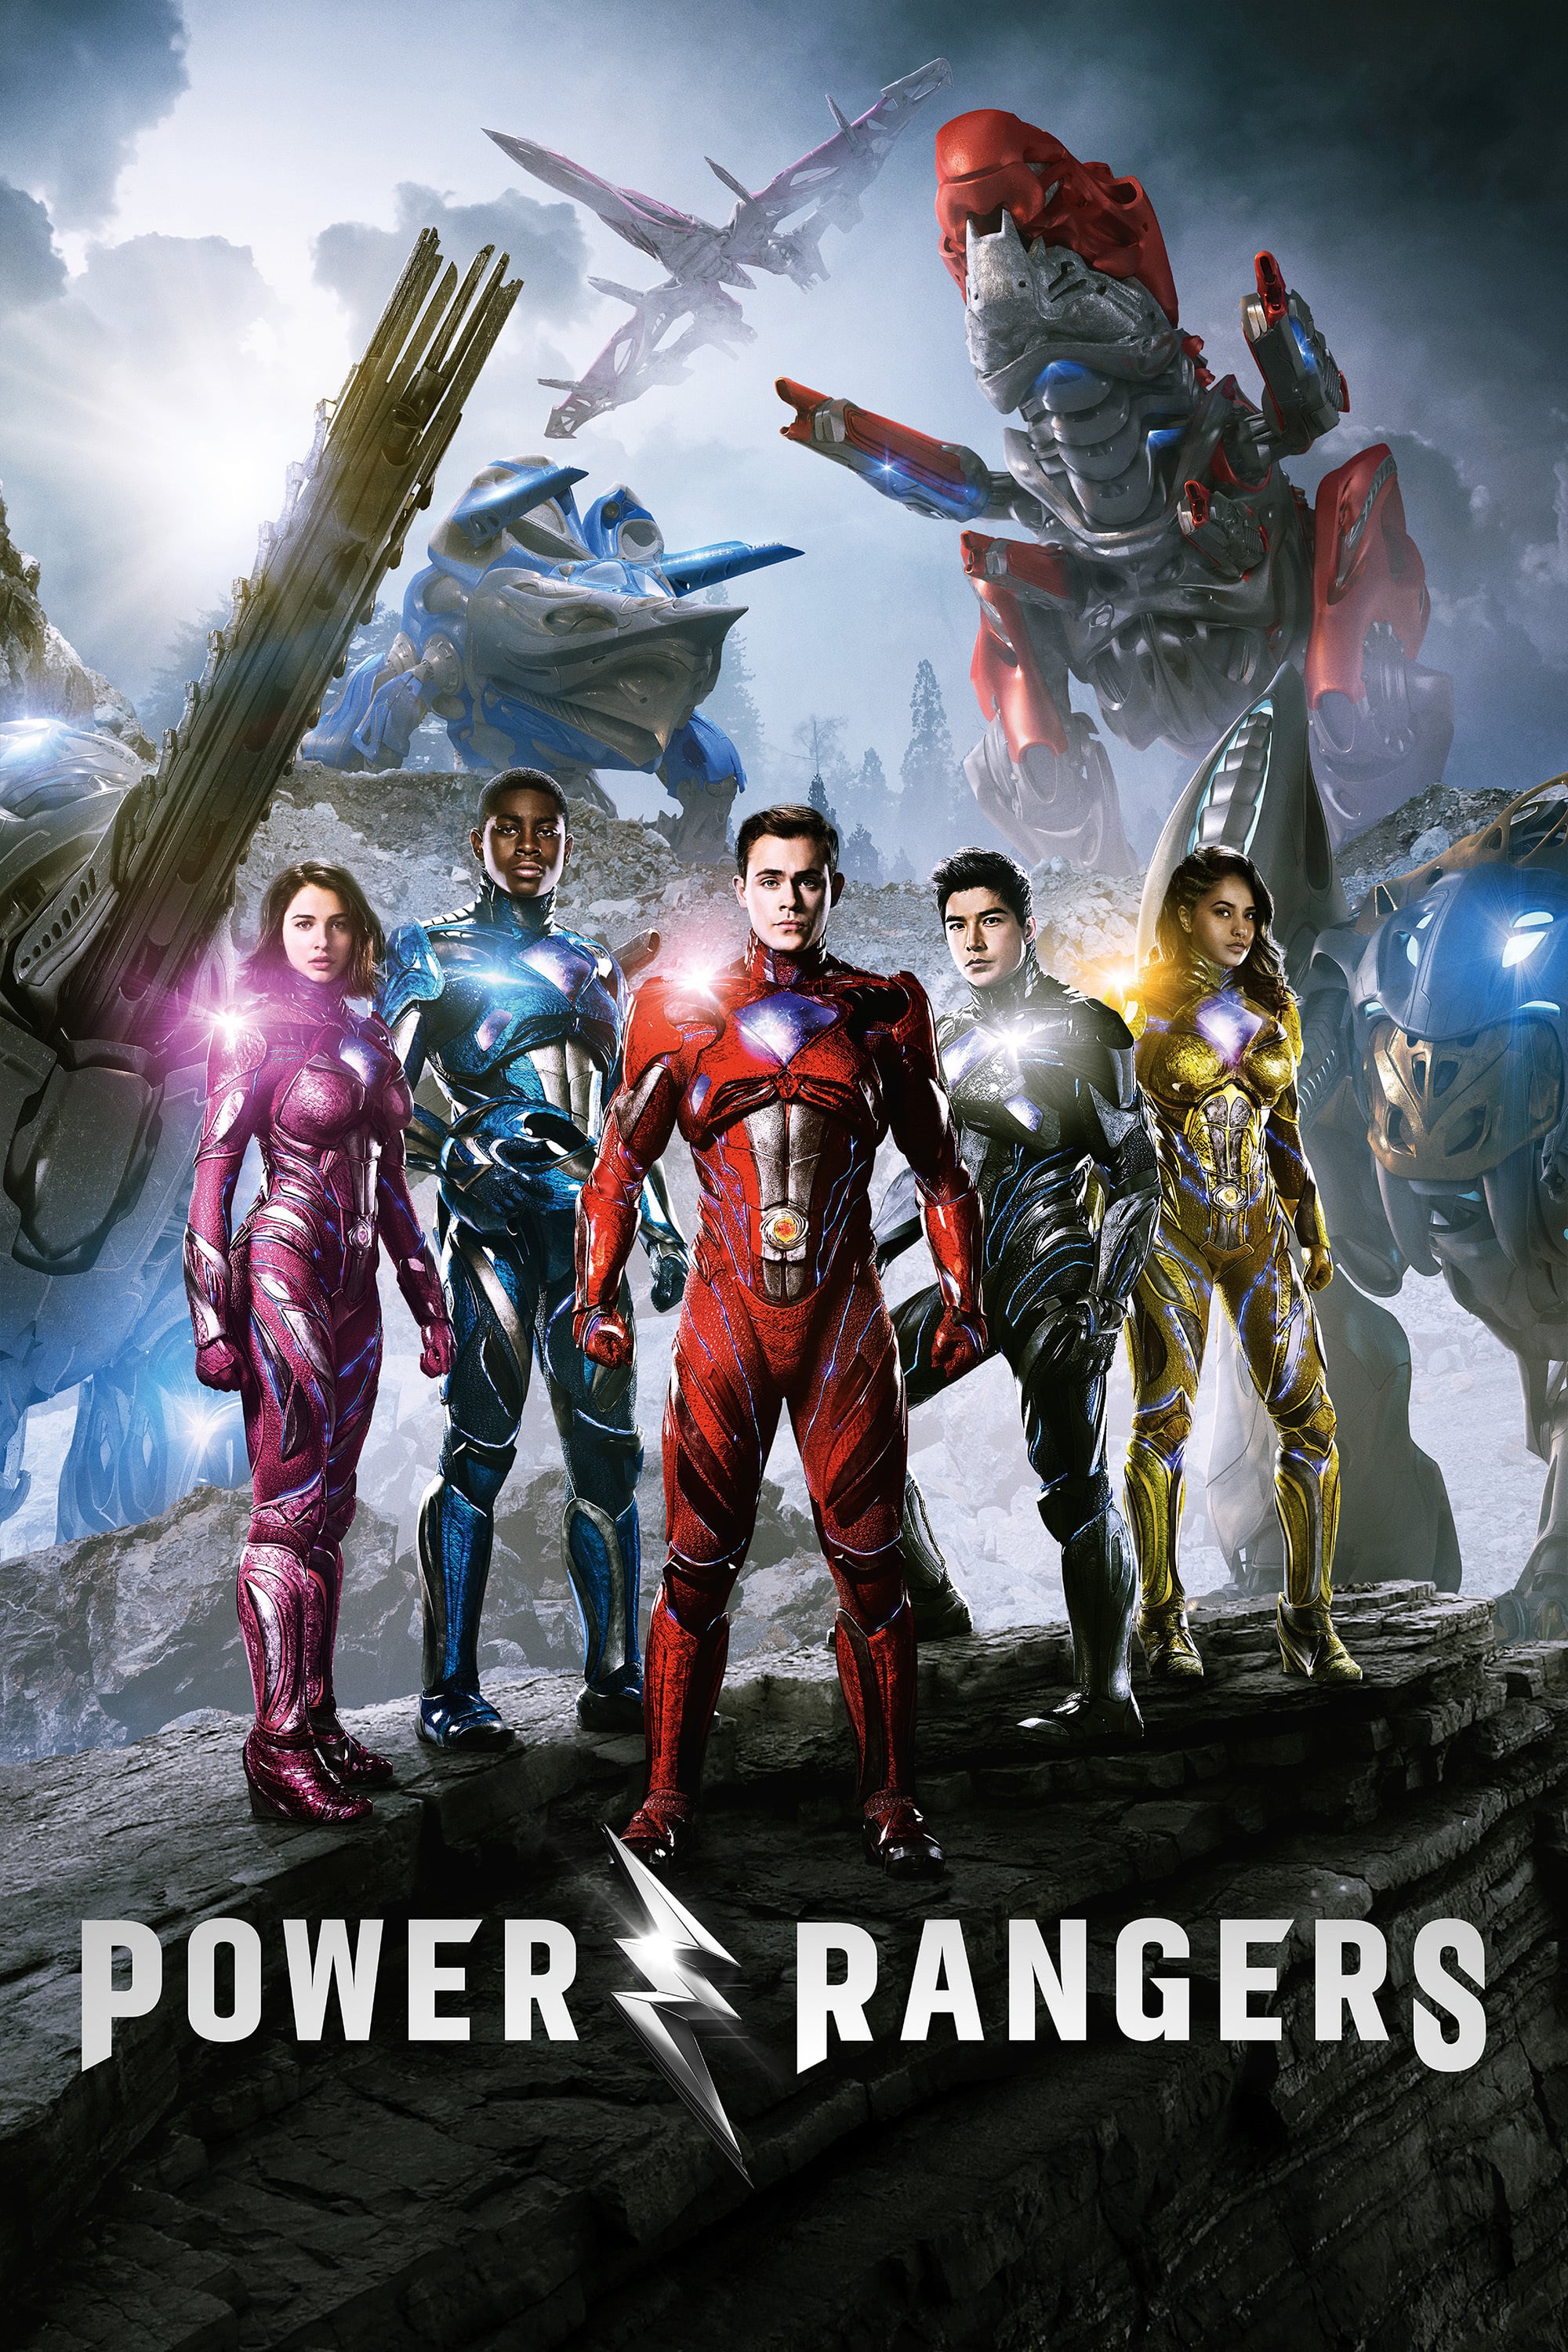 Power Rangers 2017 Full Movie Download